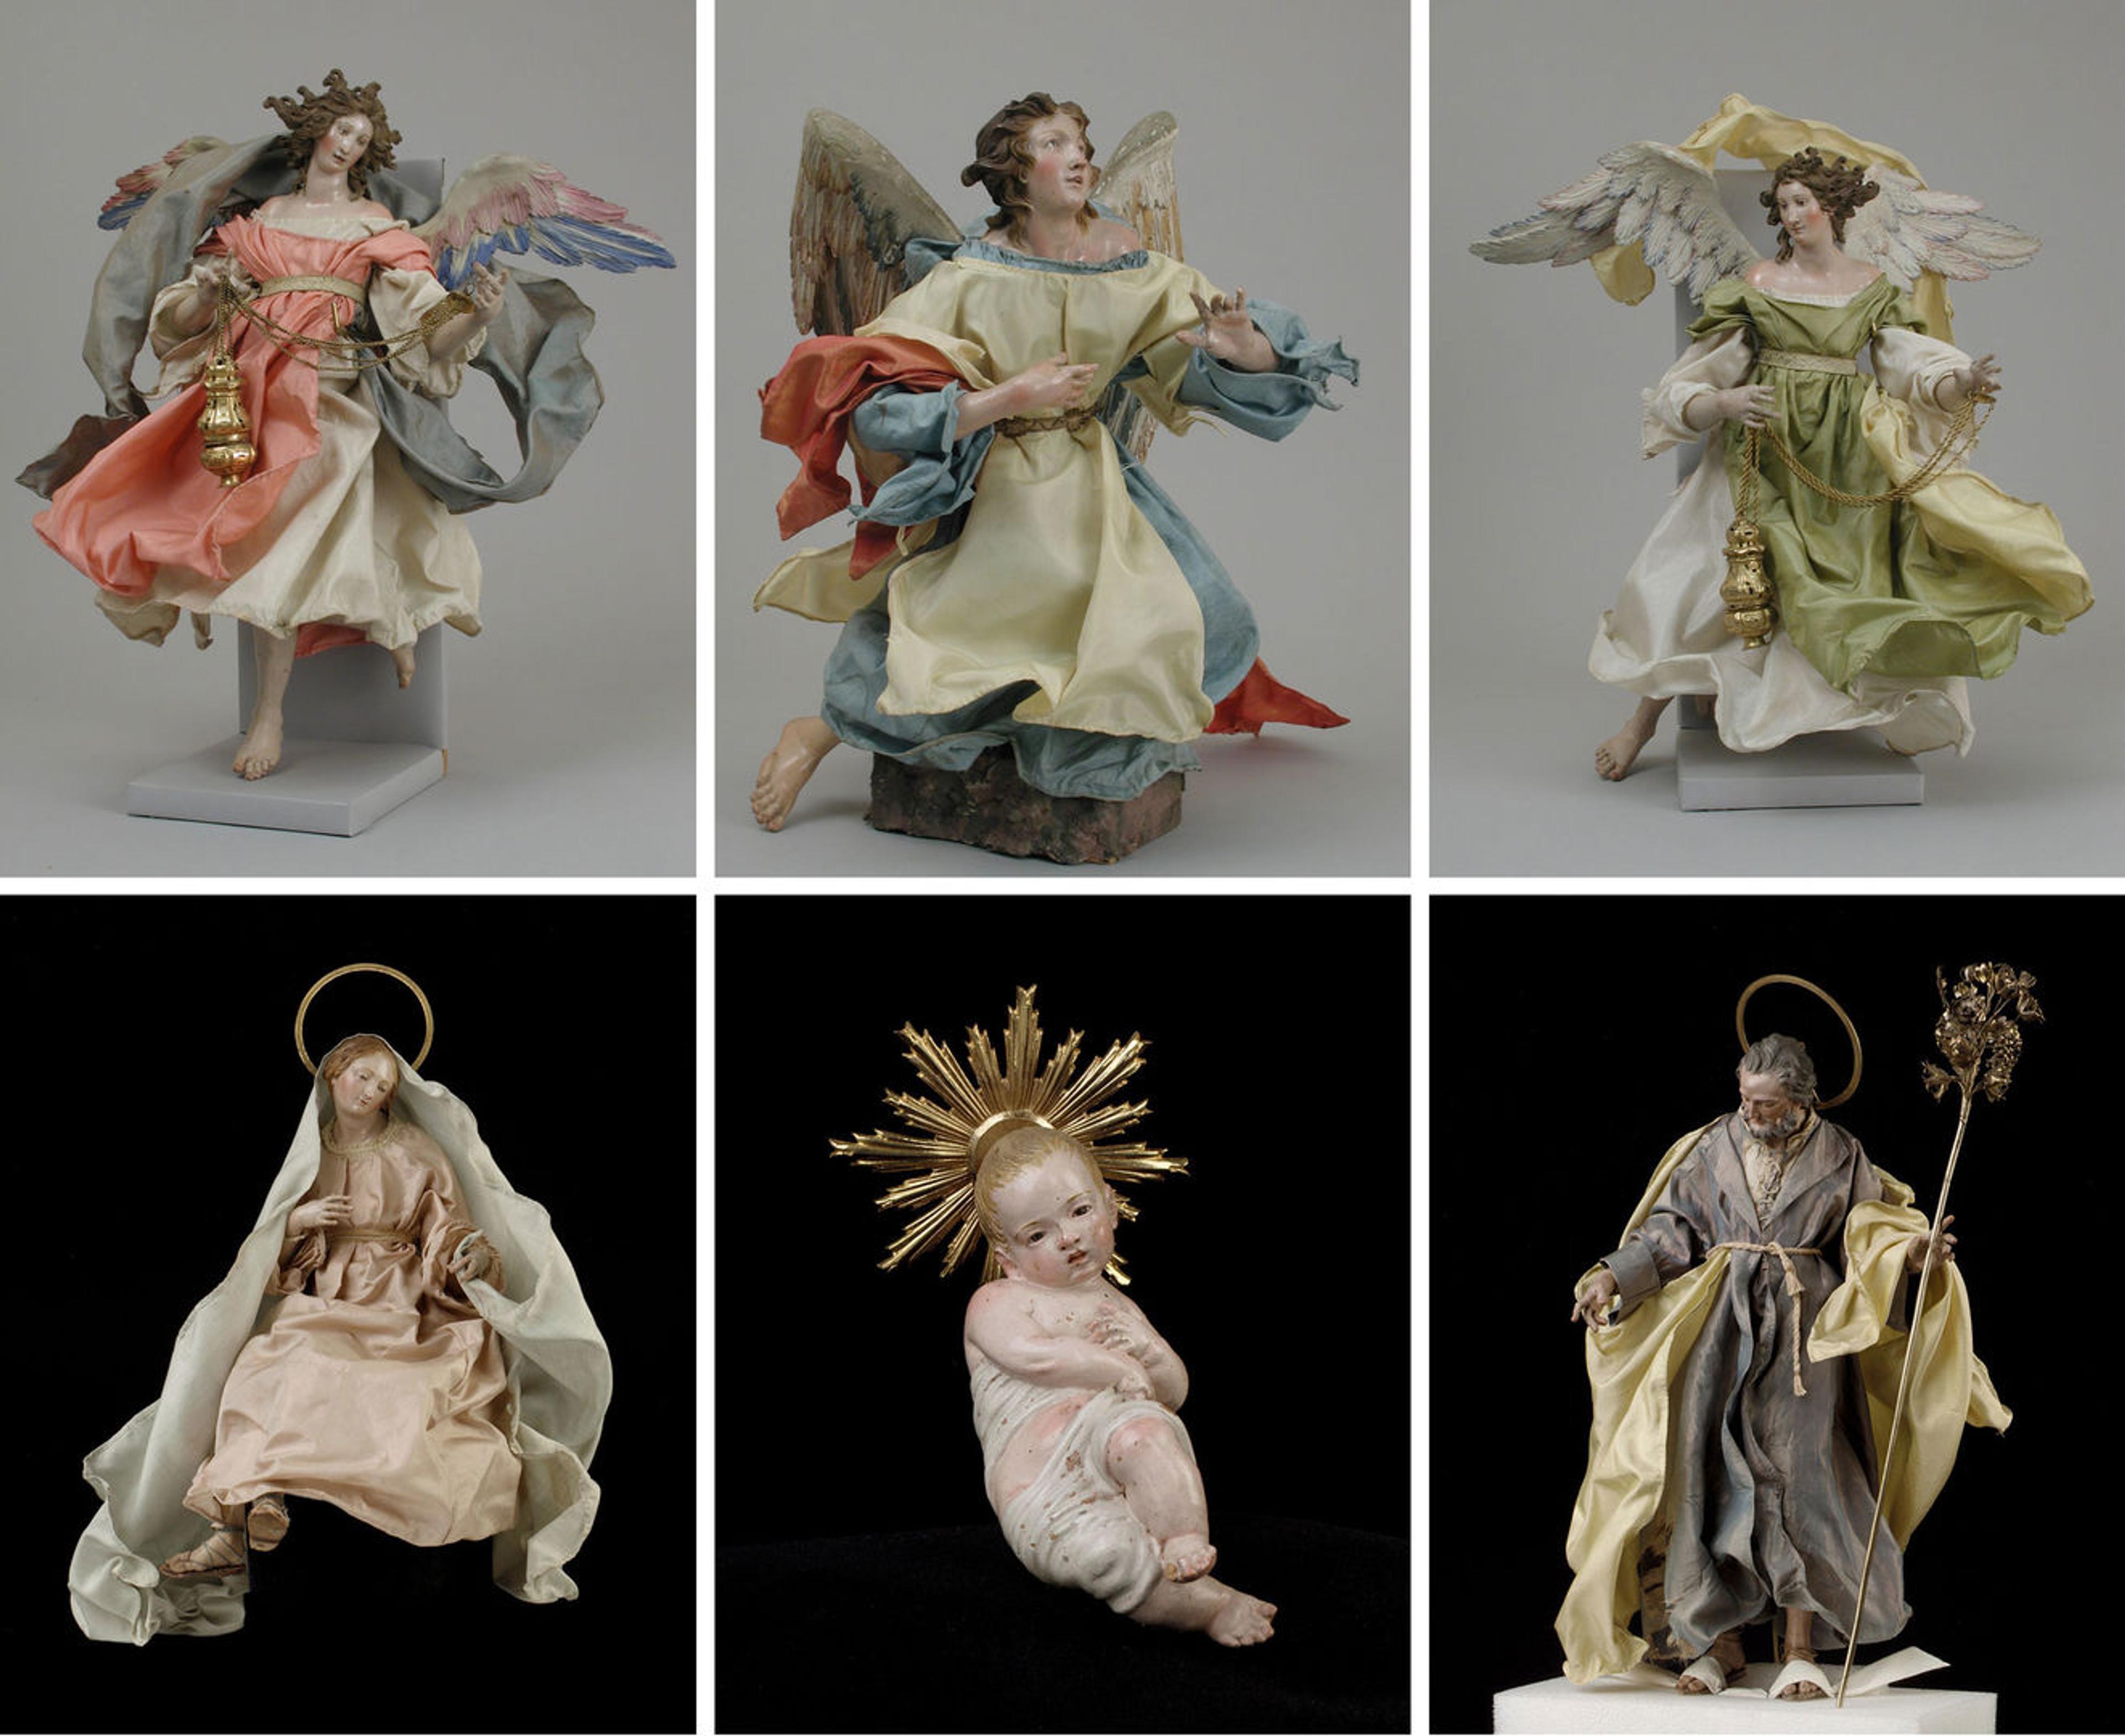 Assorted creche figures representing angels, the Virgin, Jesus, and Saint Joseph